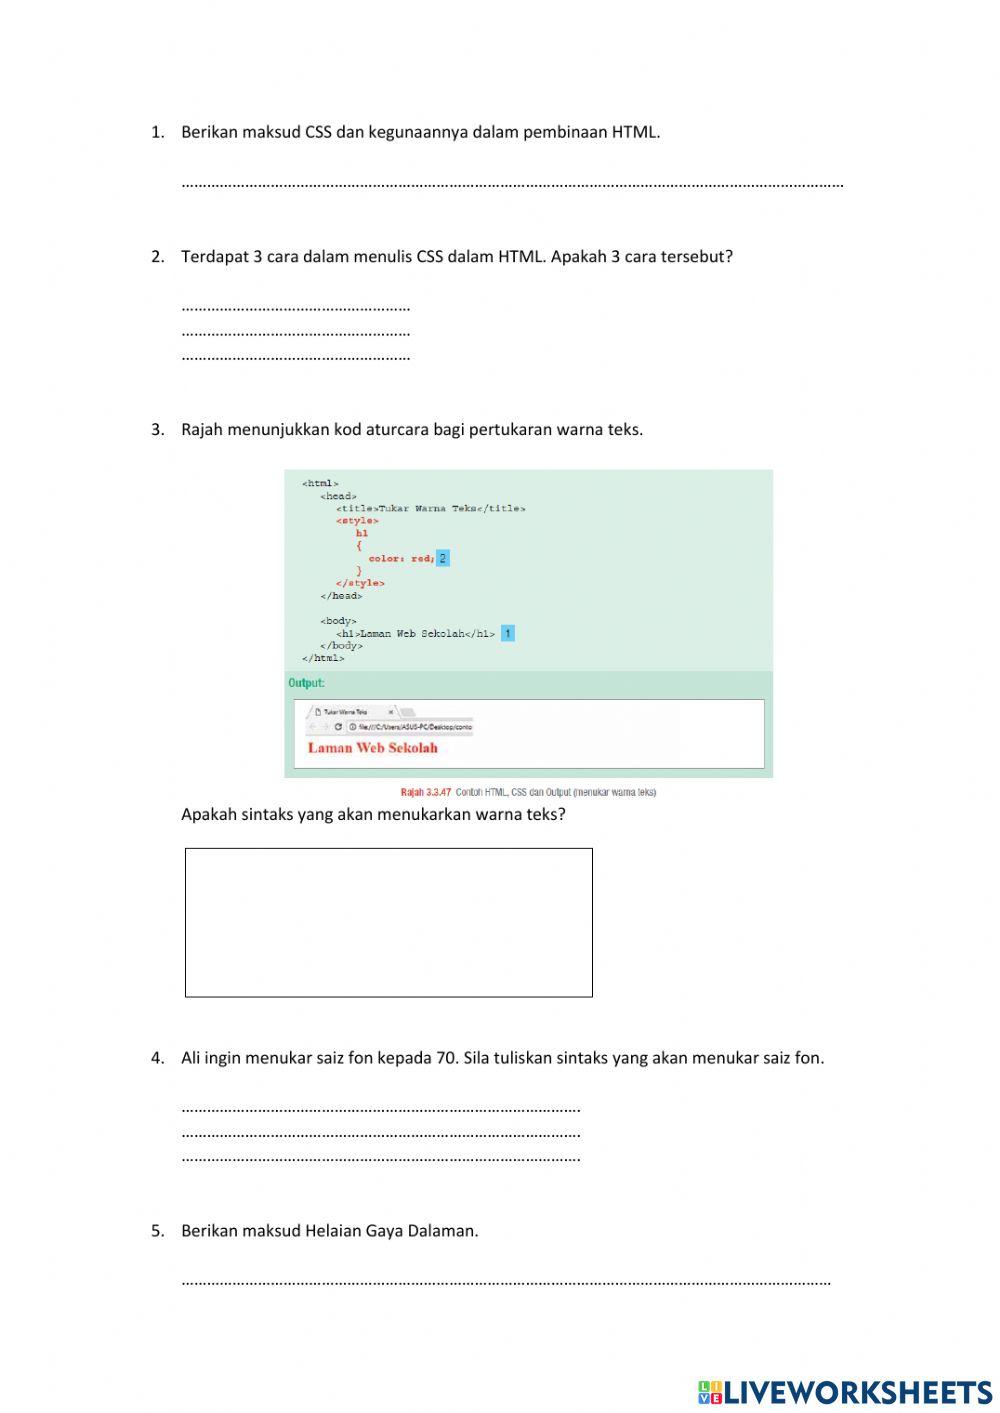 Menggunakan Cascading Stye Sheets (CSS) untuk menggayakan Text, Font, Background, Table, Borders dan Position